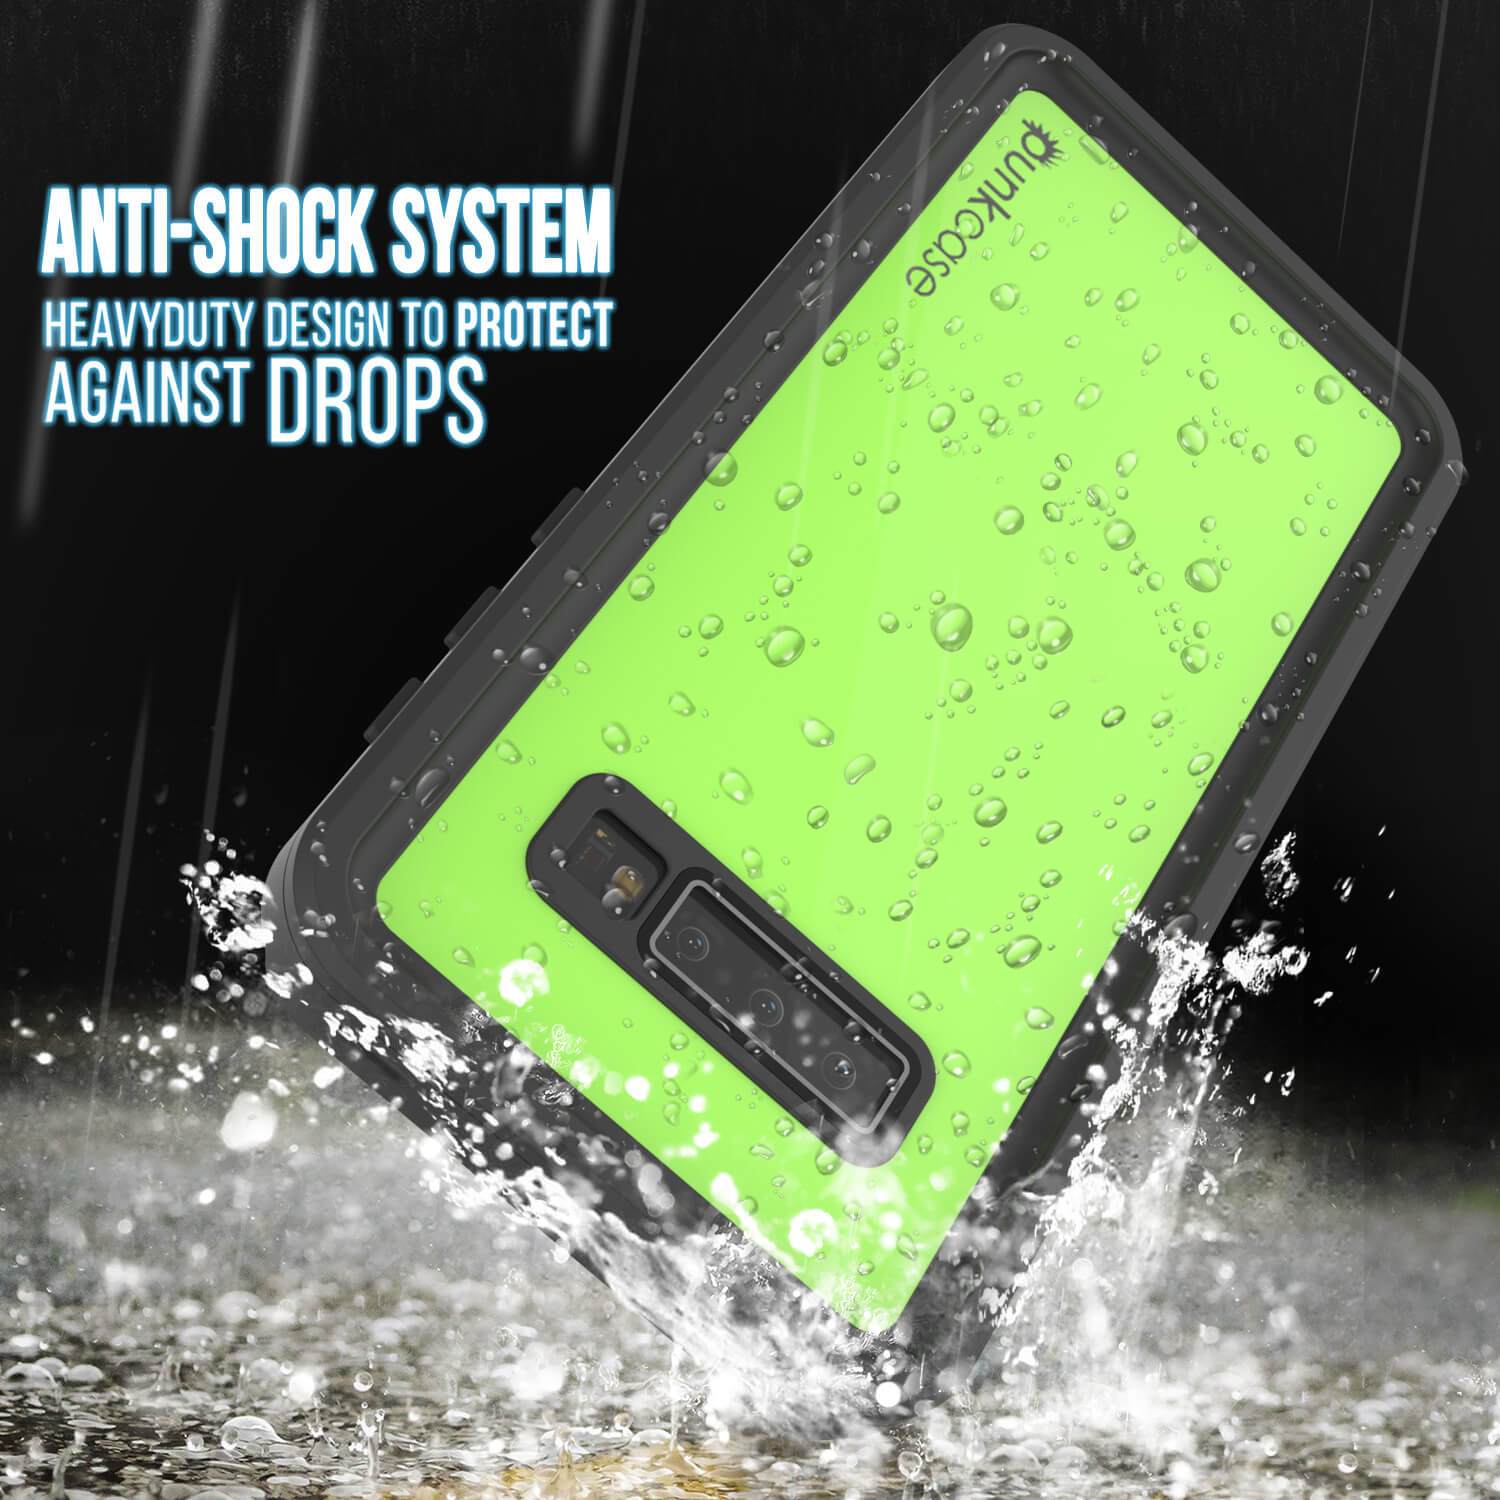 Galaxy S10 Waterproof Case PunkCase StudStar Light Green Thin 6.6ft Underwater IP68 ShockProof